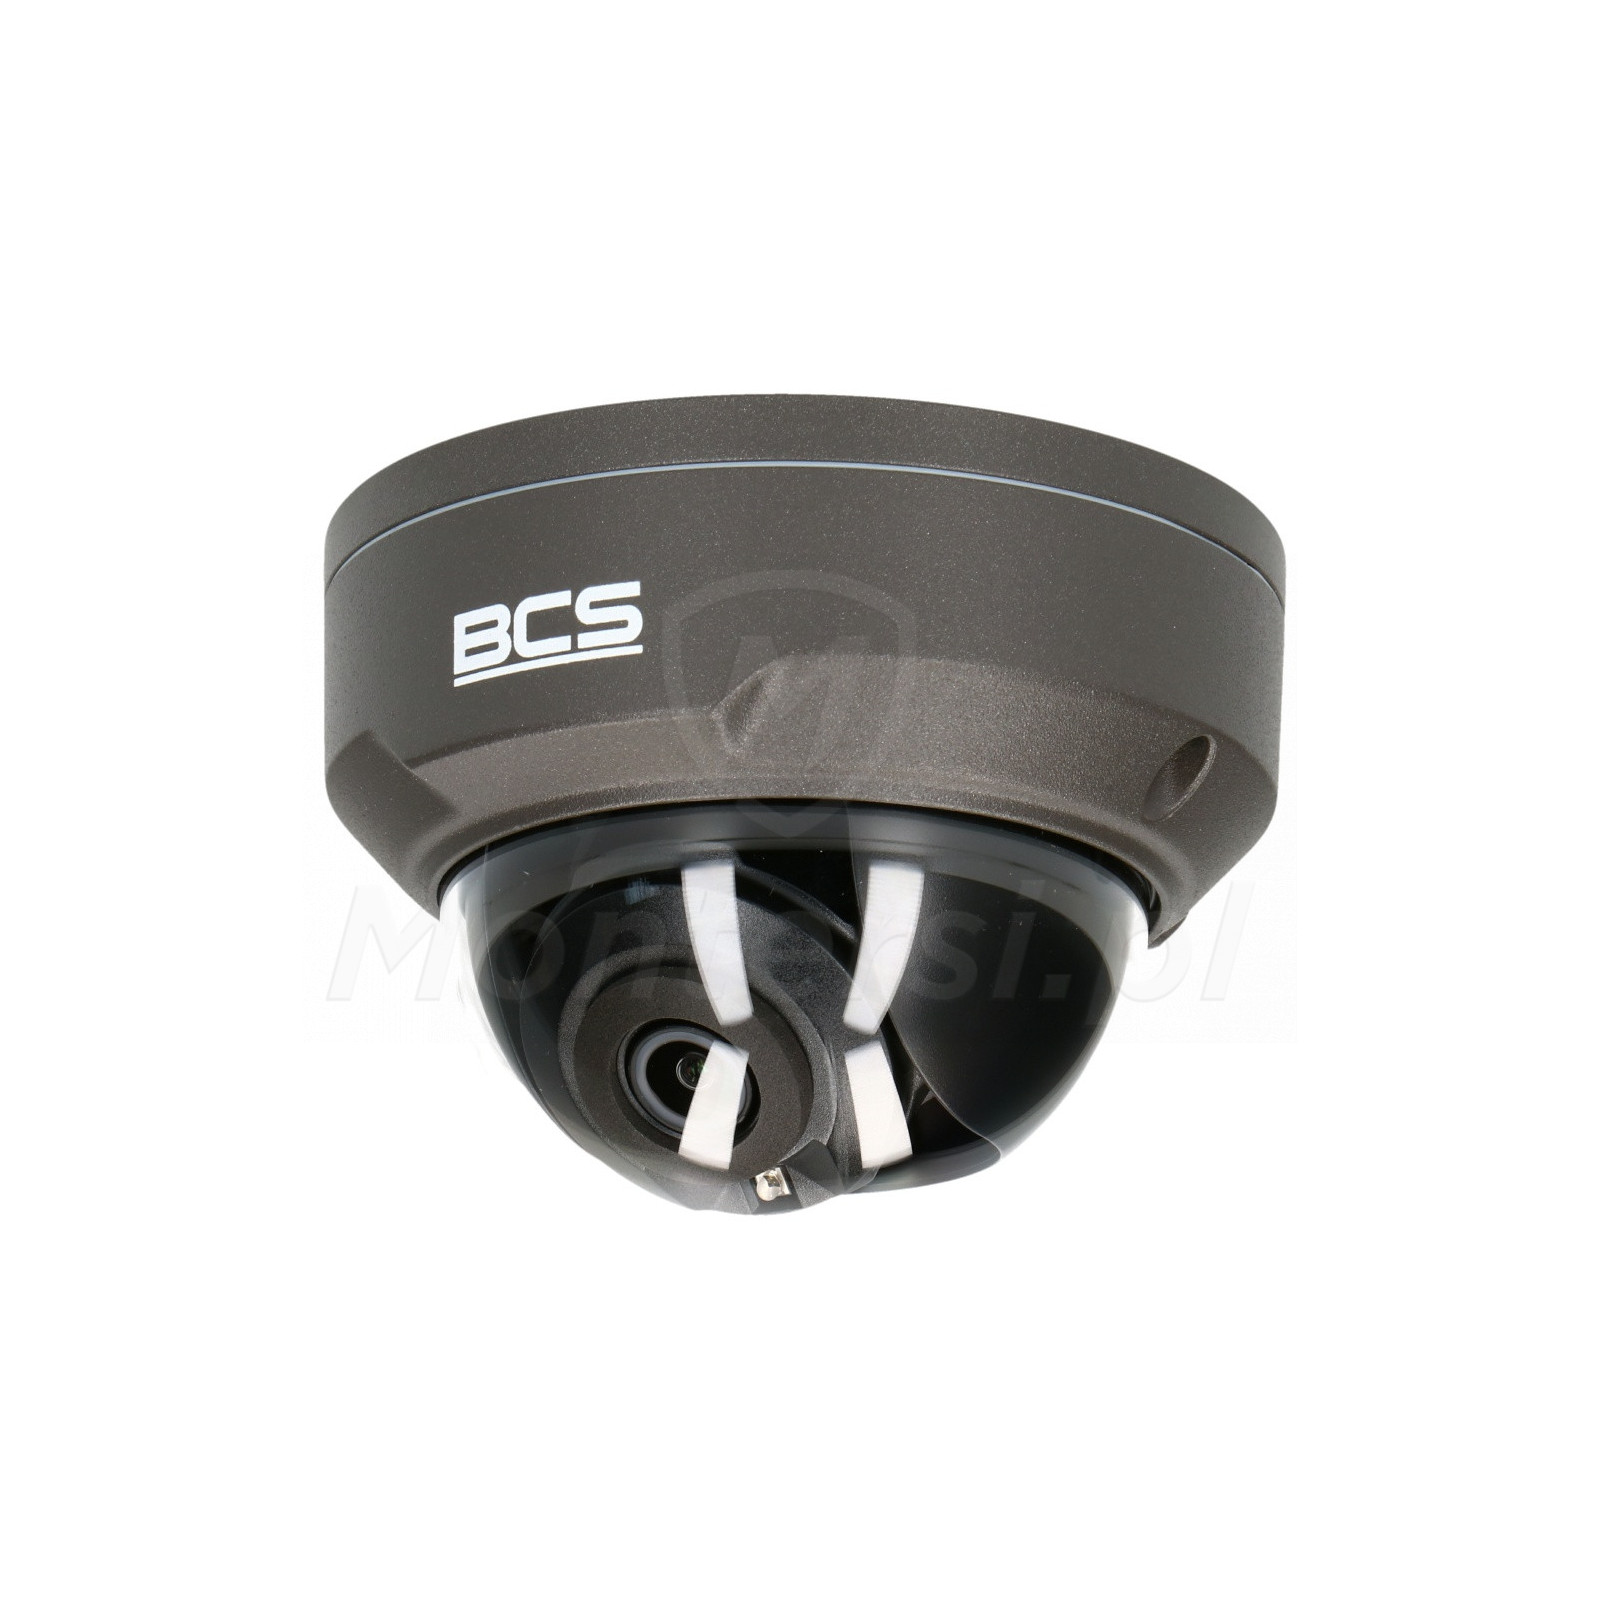 BCS-P-DIP25FSR3-Ai1-G kamera wandaloodporna